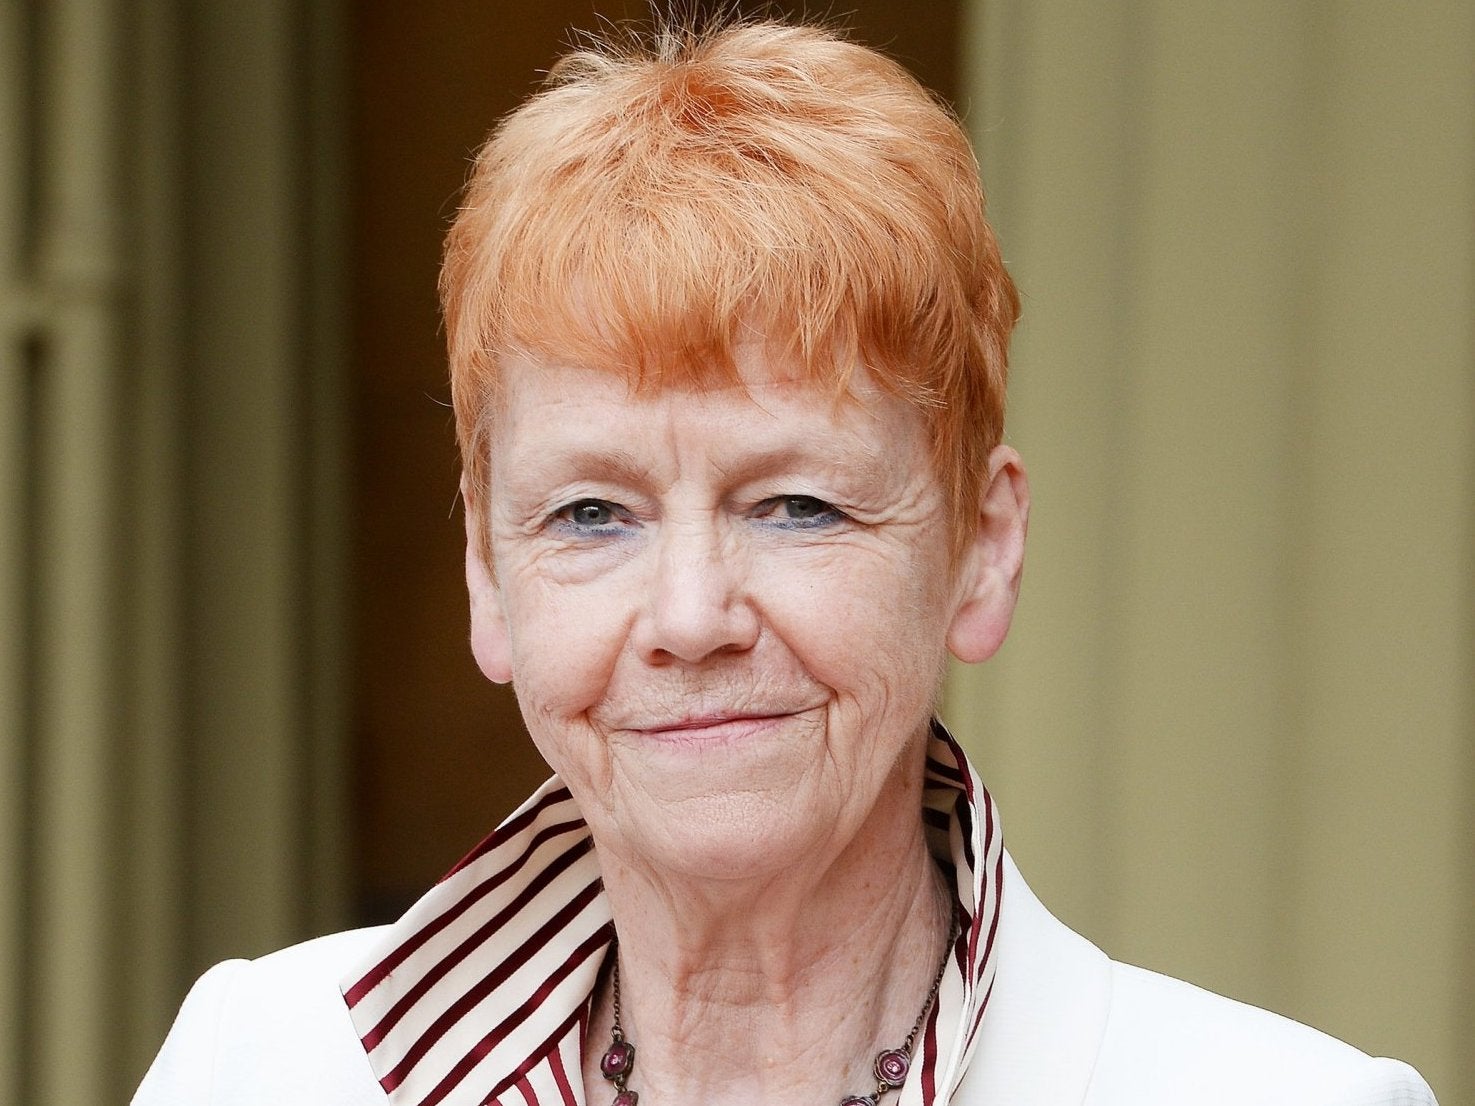 Incumbent commissioner Dame Vera Baird said victims need someone ‘in their corner’